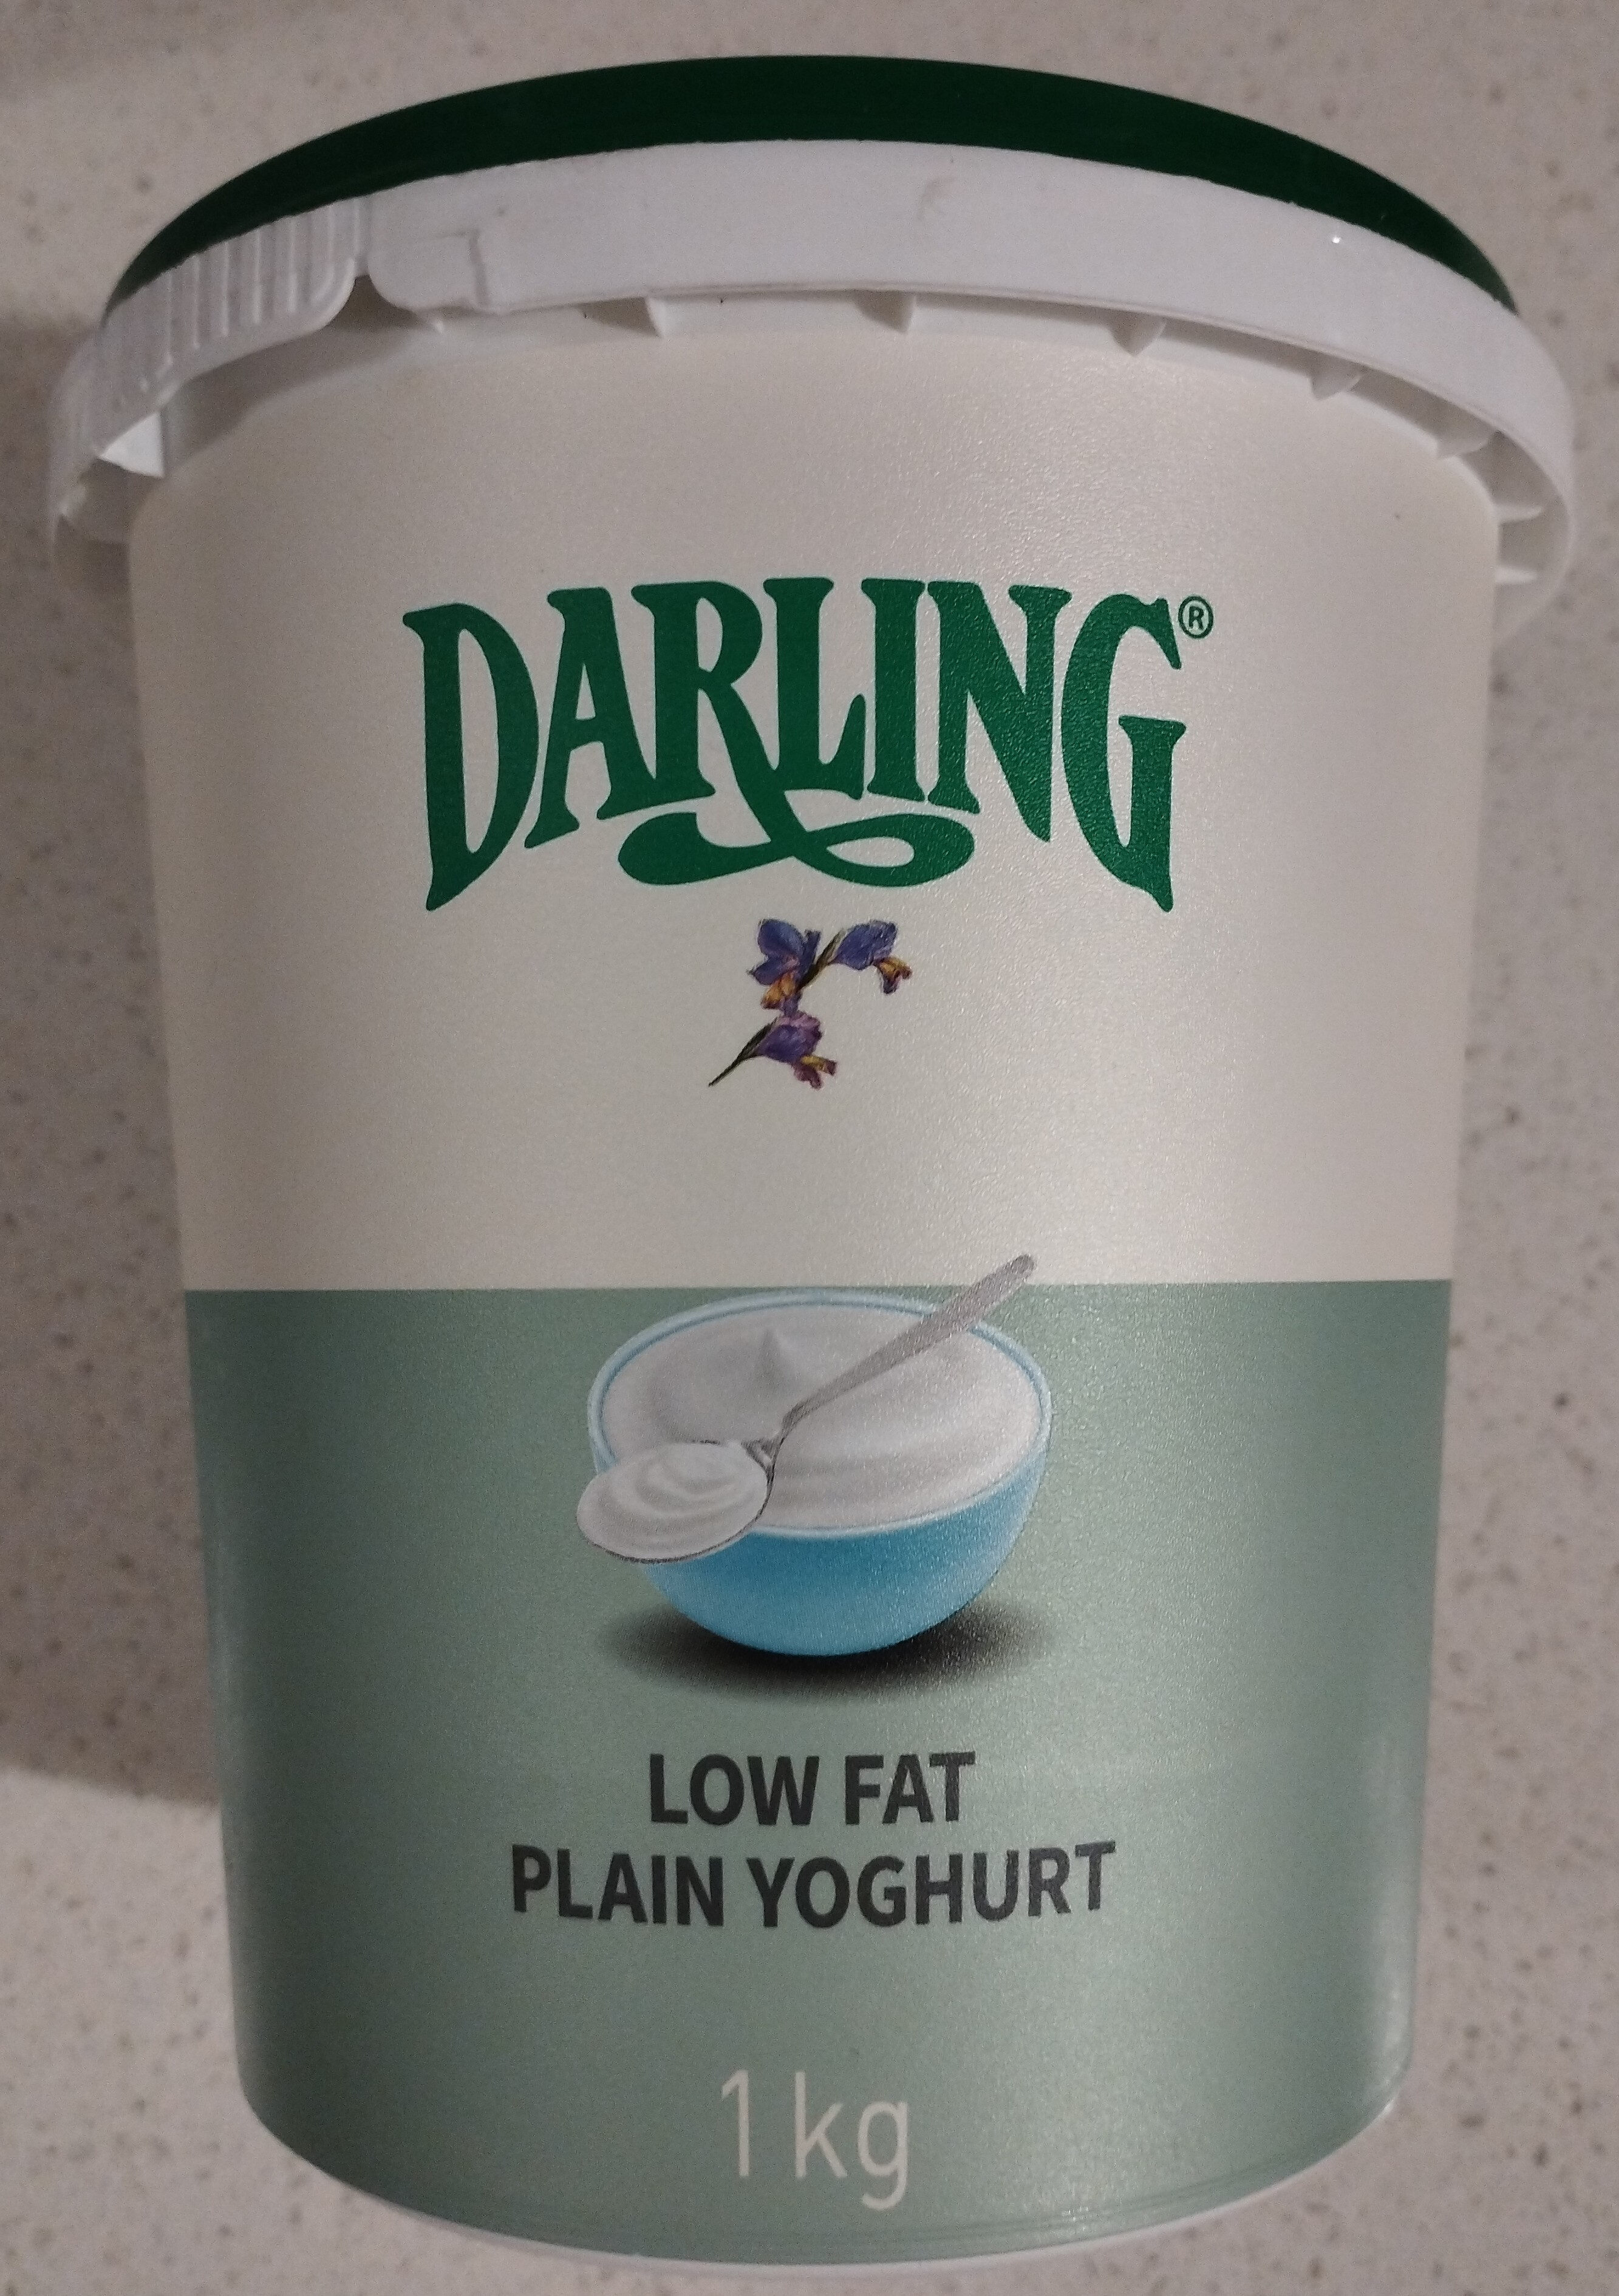 Low fat plain yoghurt - Product - en